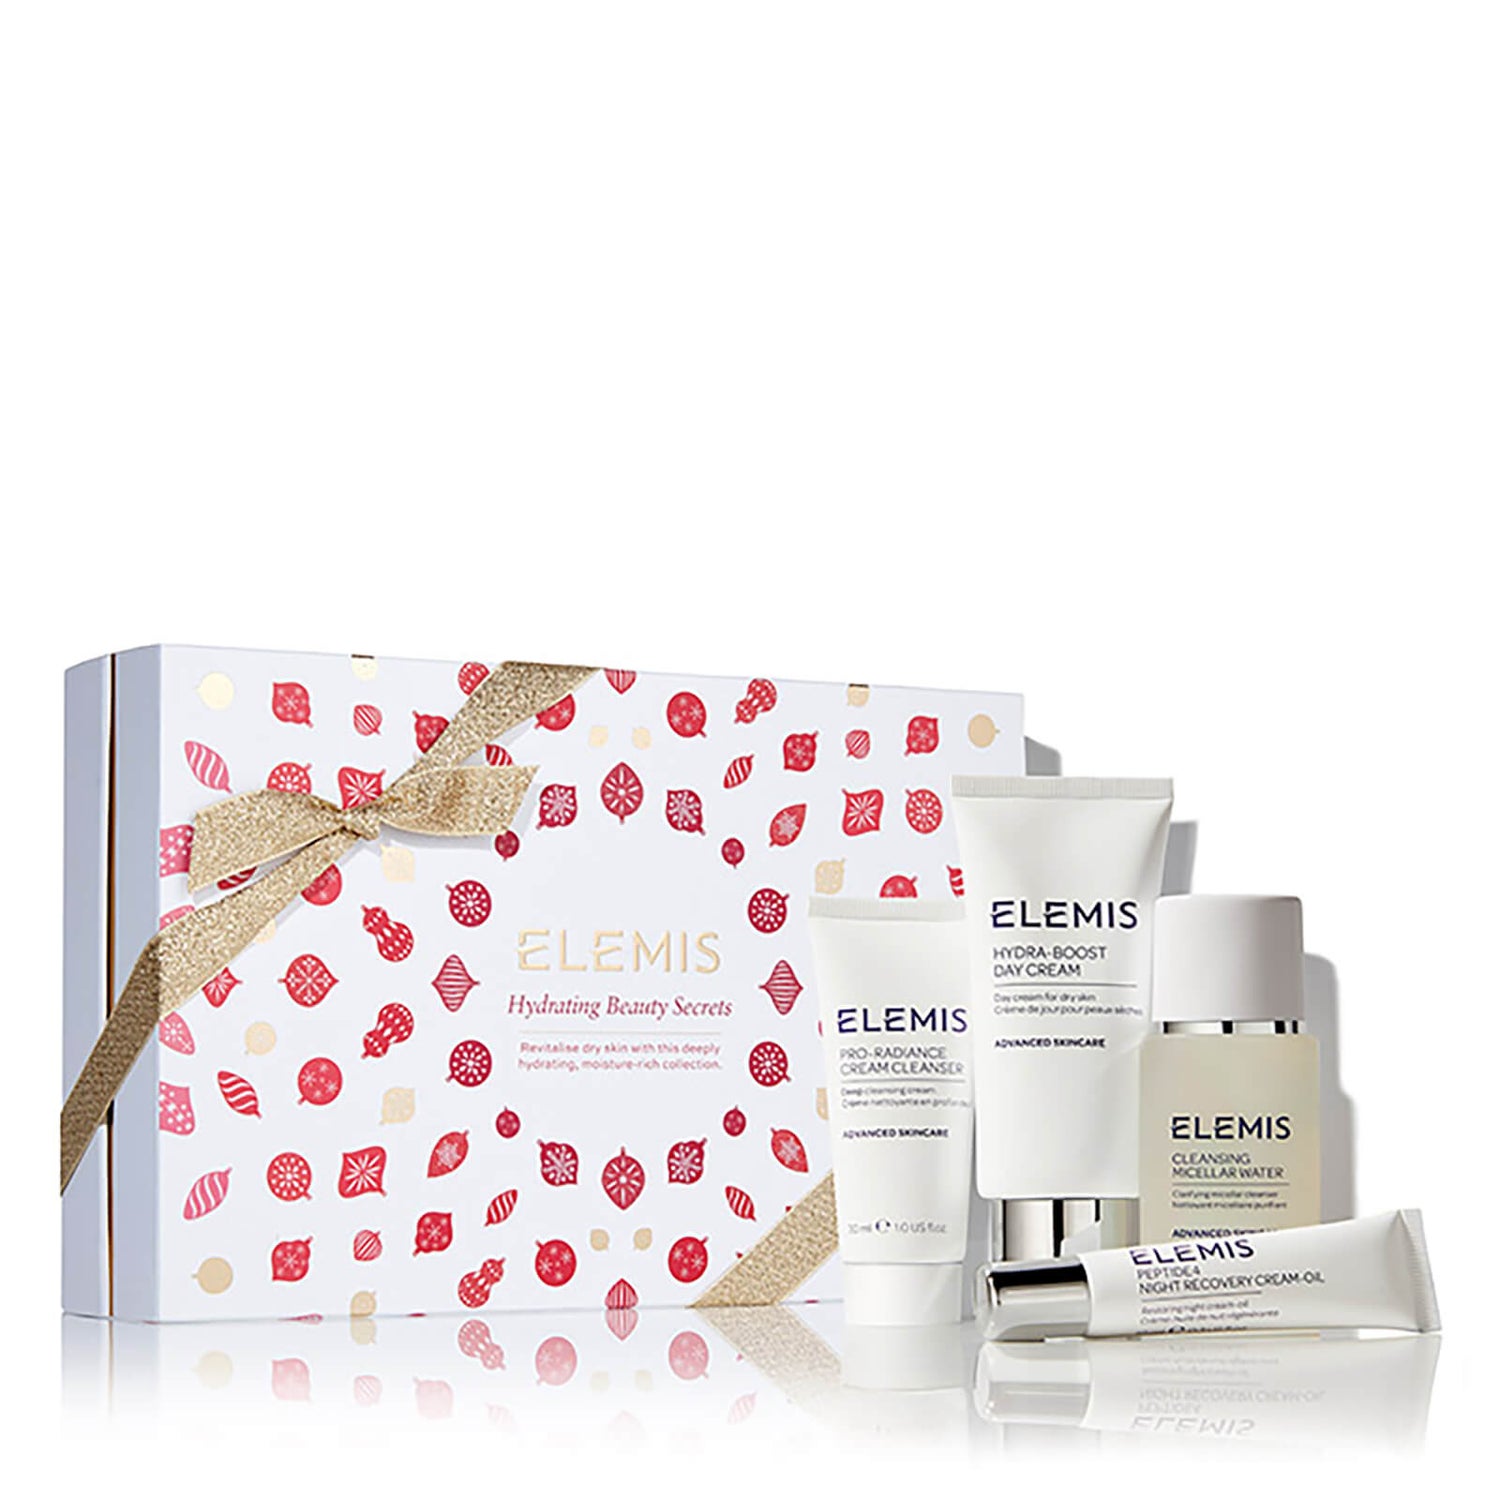 Elemis Hydrating Beauty Secrets Normal/Dry Skin Gift Set (Worth £70.00)